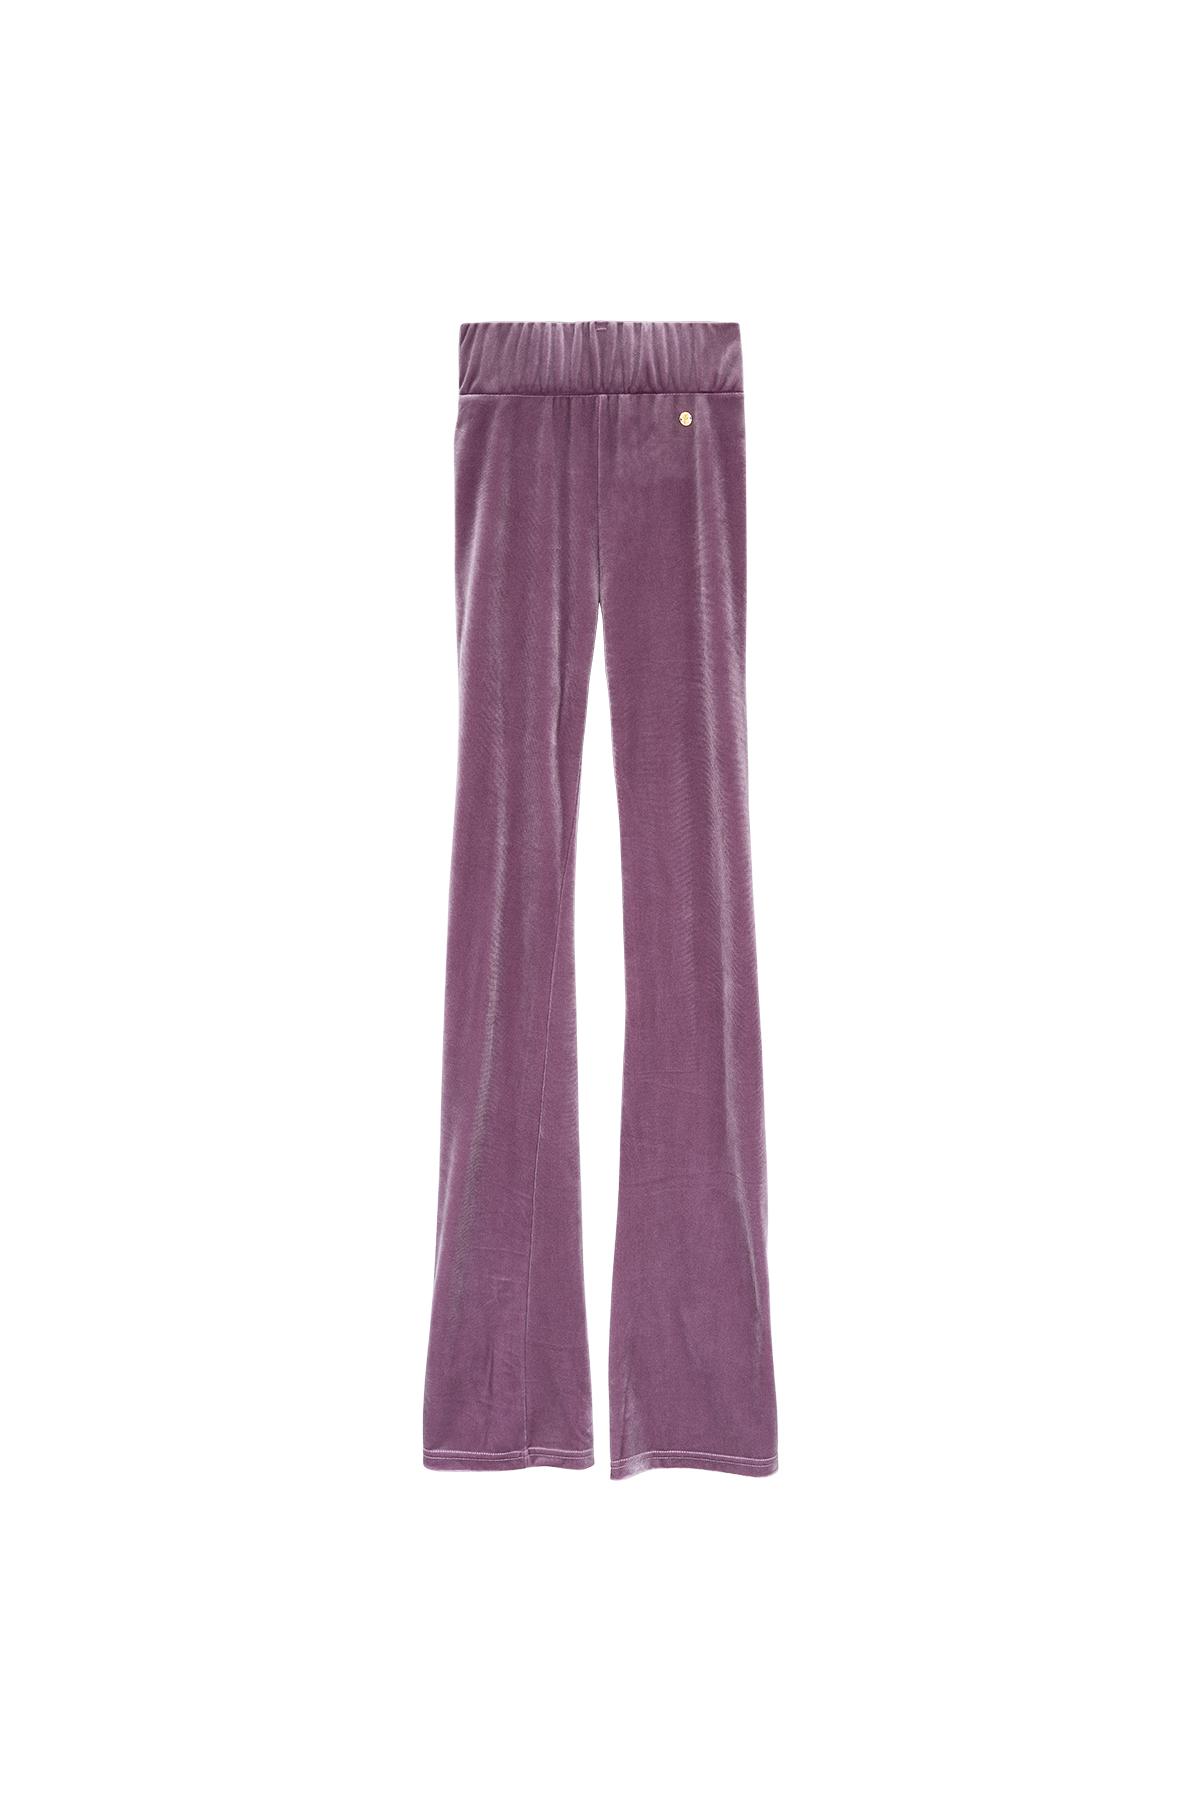 Kadife kloş pantolon Purple S